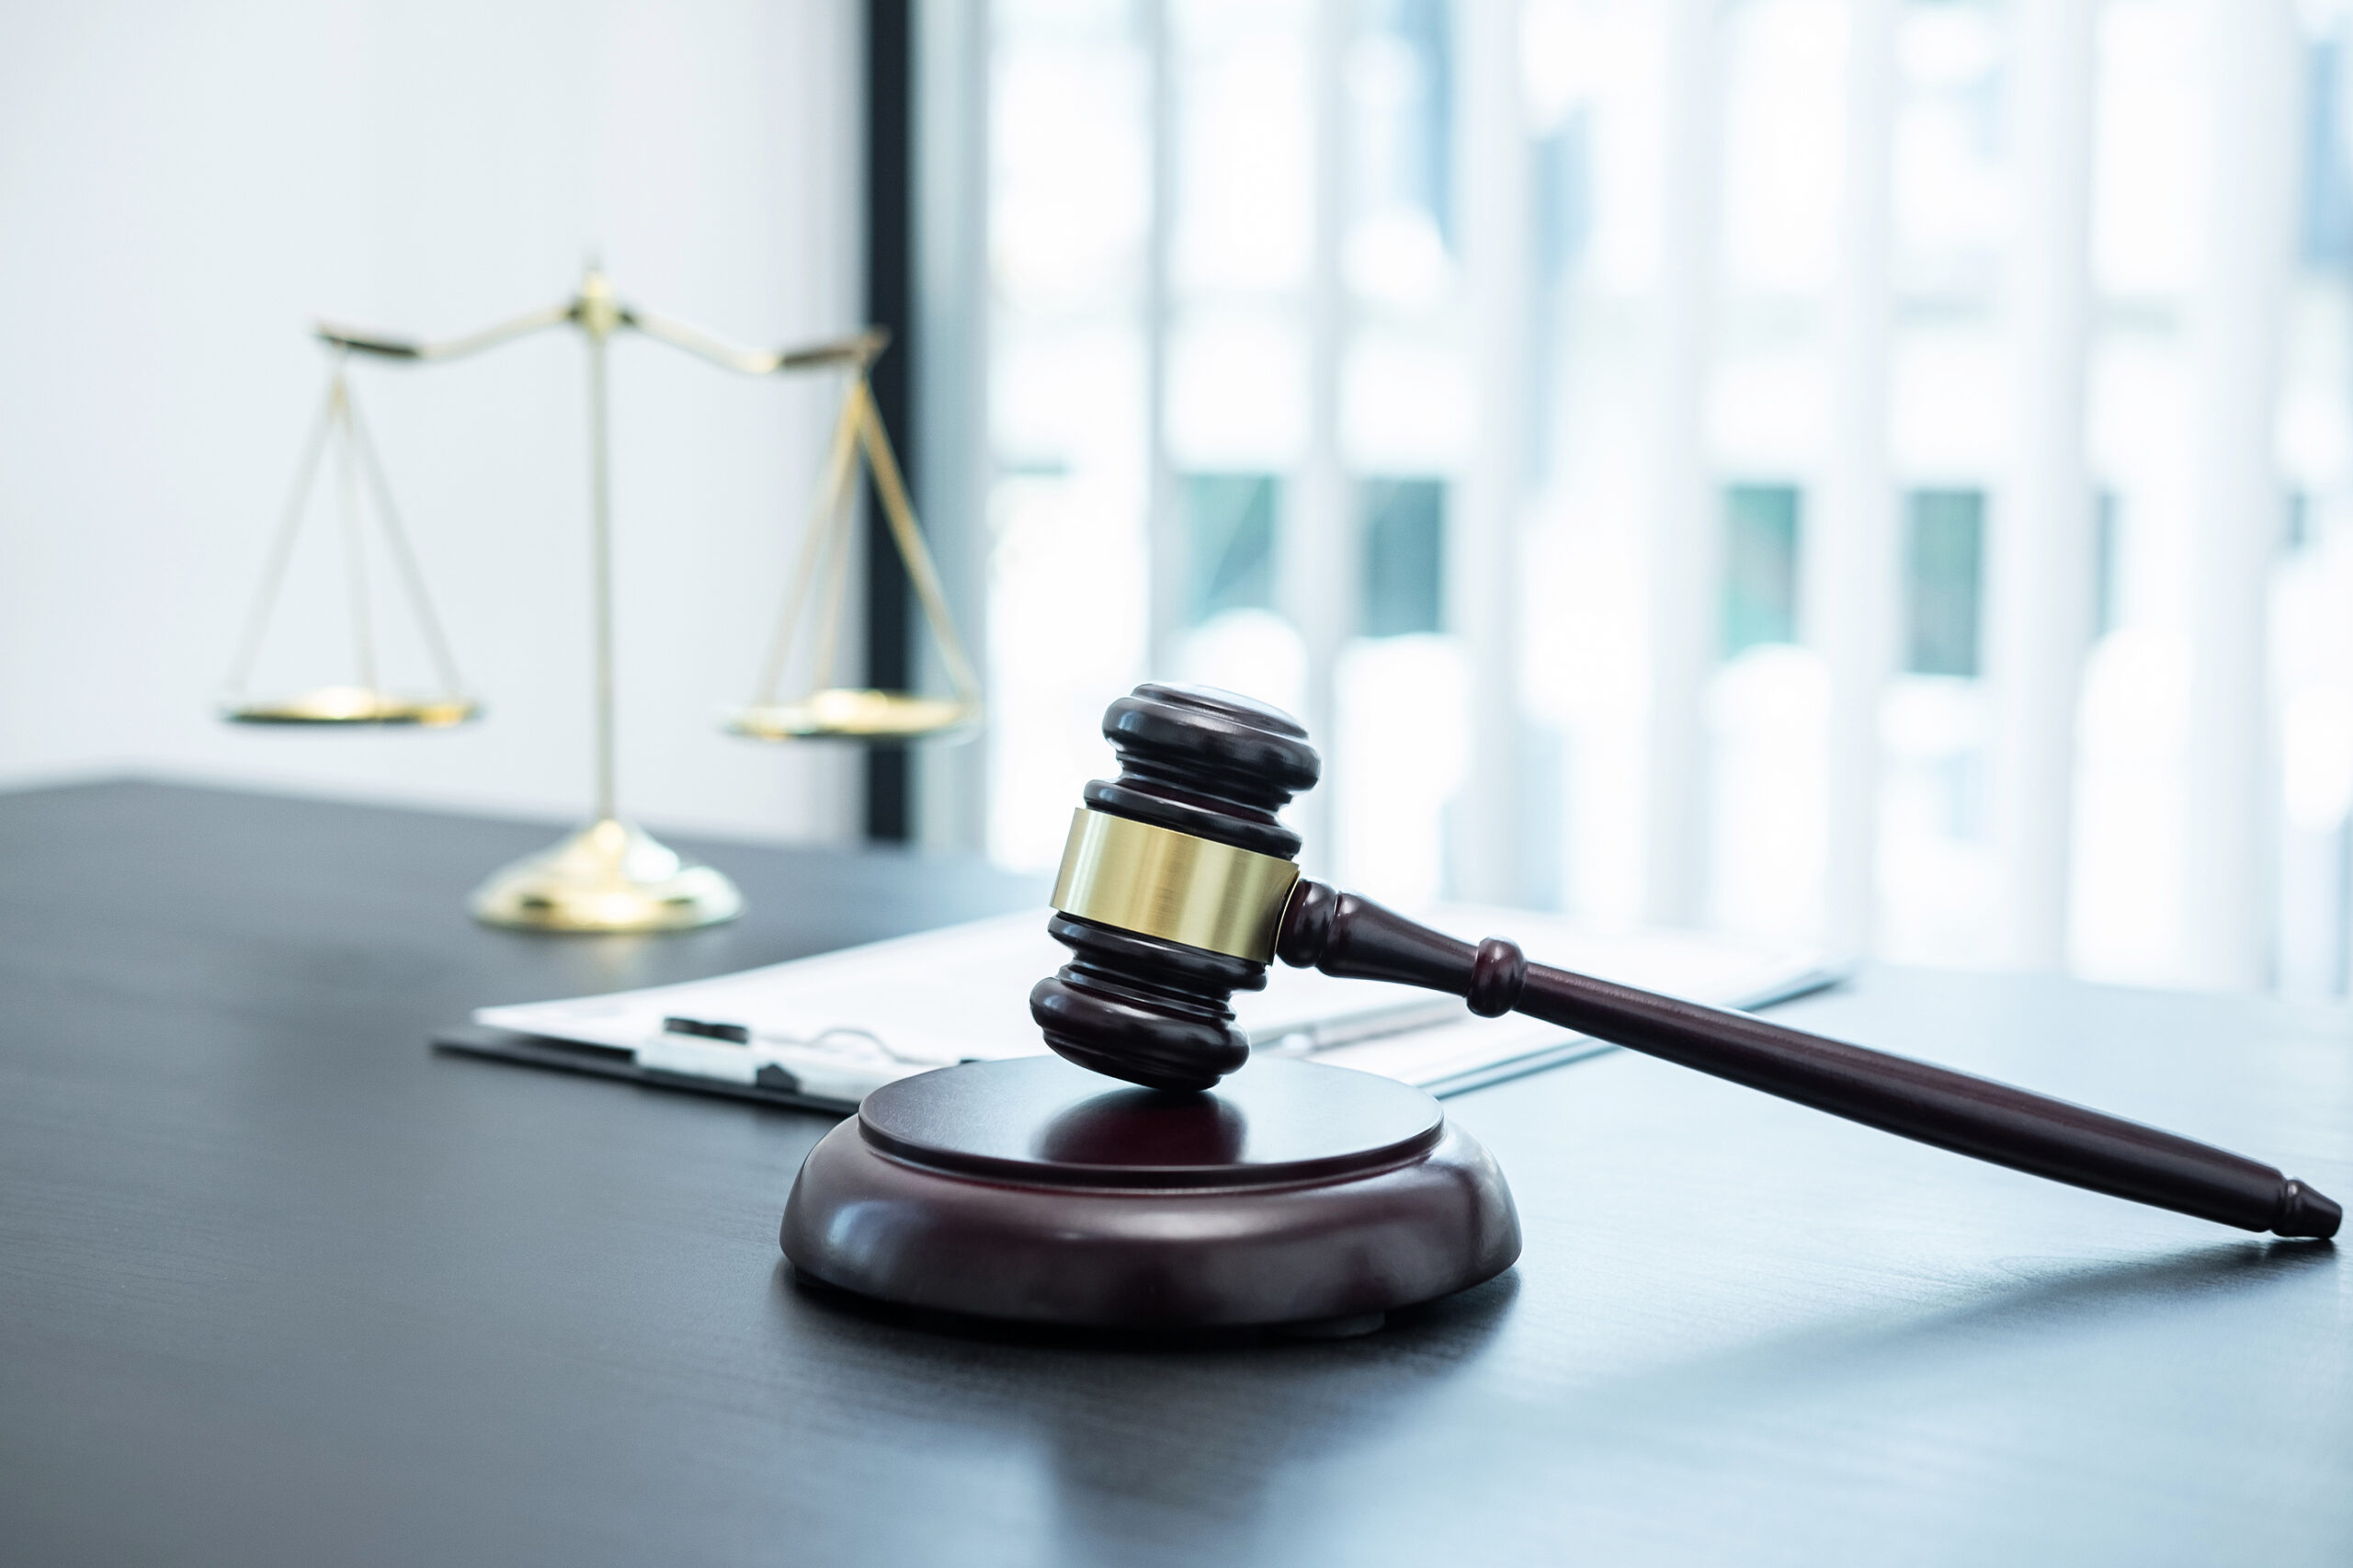 Judicial Panel on Multidistrict Litigation Considers Hair Straightener Lawsuit Consolidation